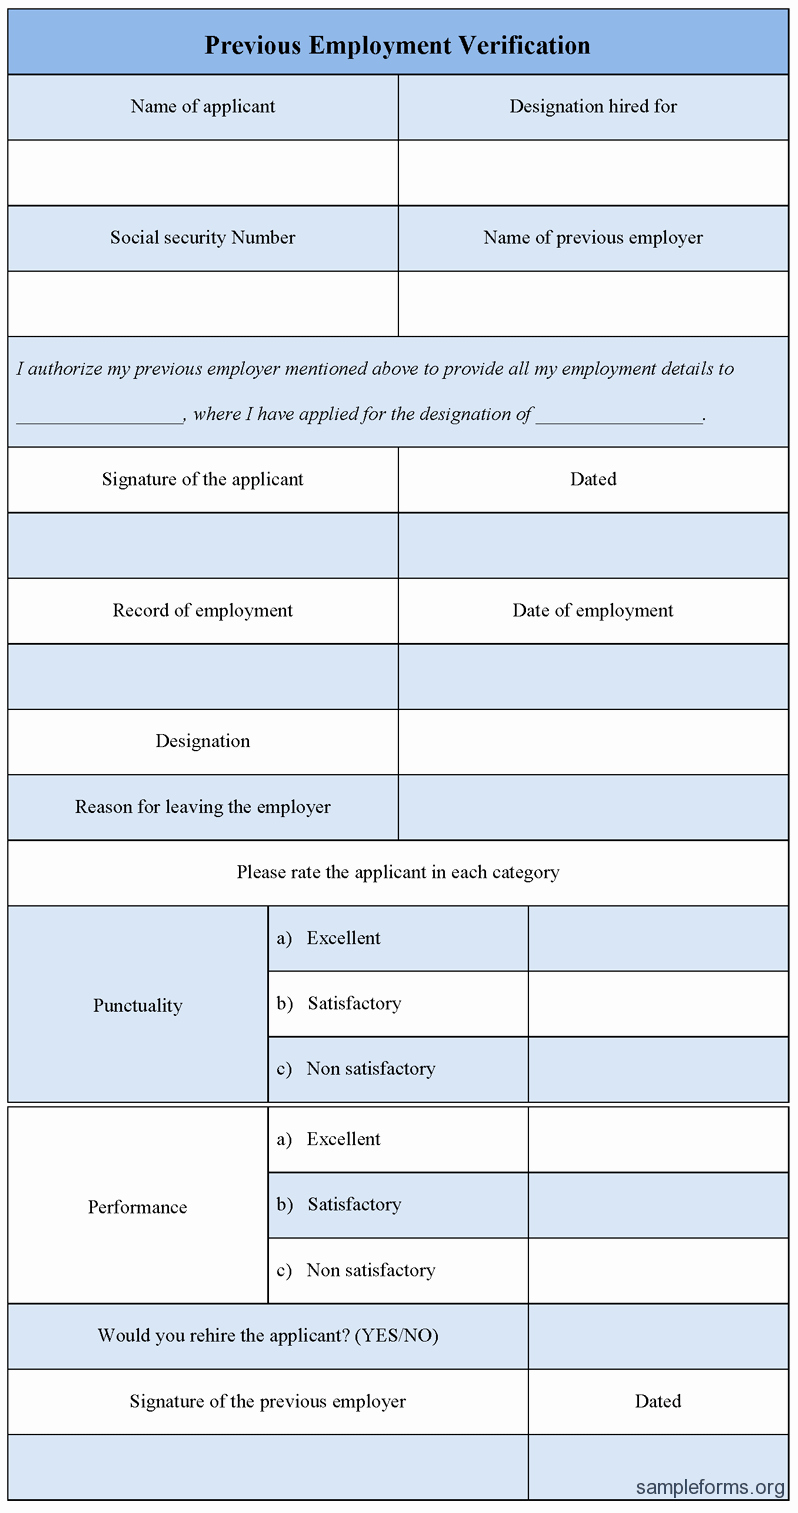 Previous Employment Verification form Sample forms